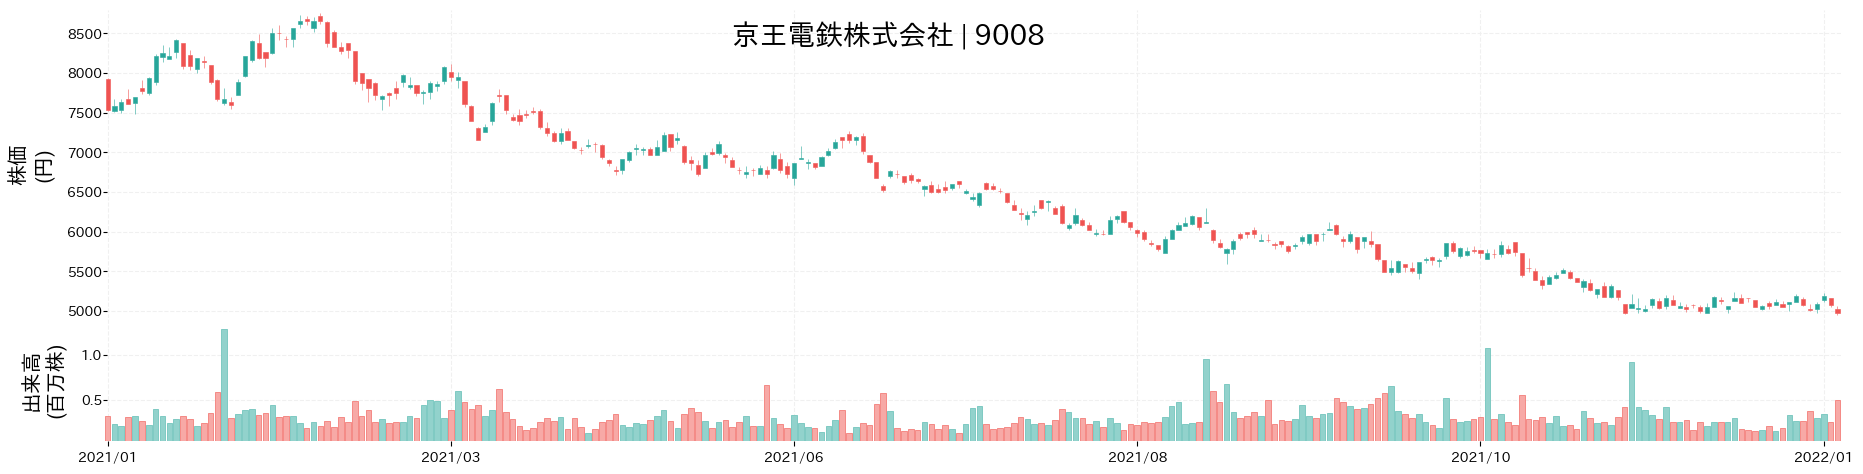 京王電鉄の株価推移(2021)